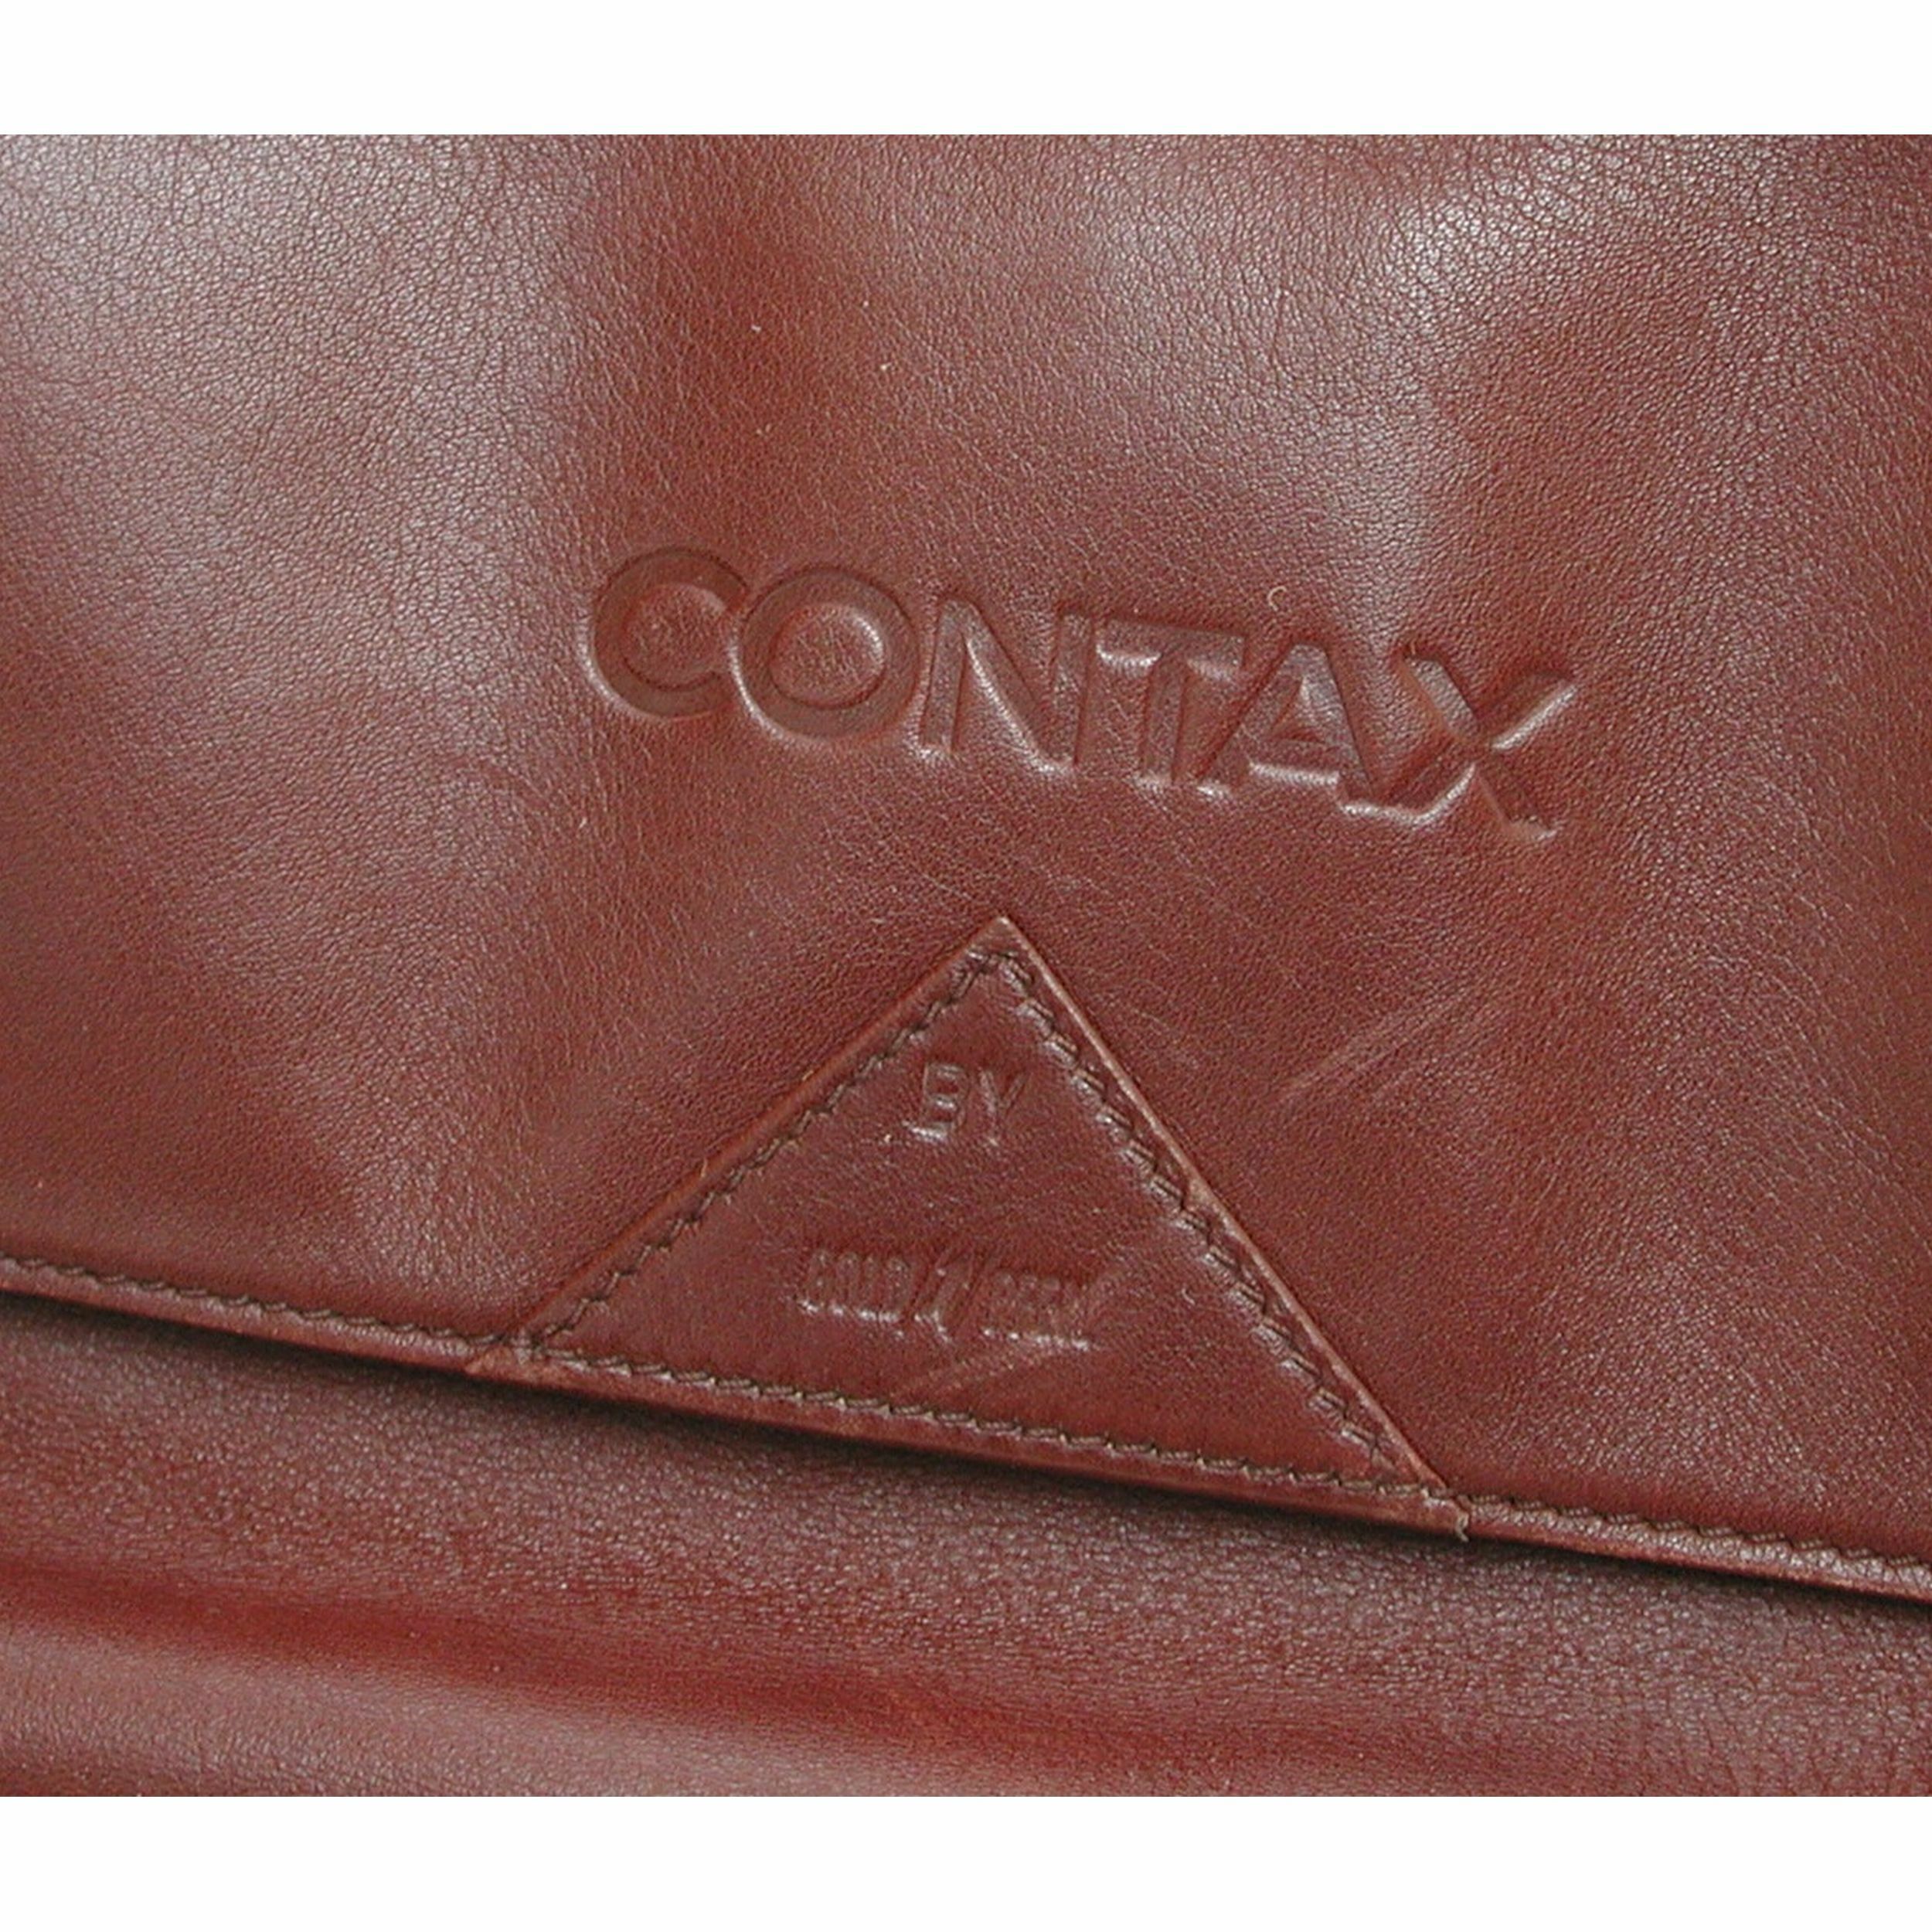 CONTAX G1 G2 CAMERA BAG BY GOLDPFEIL  #406